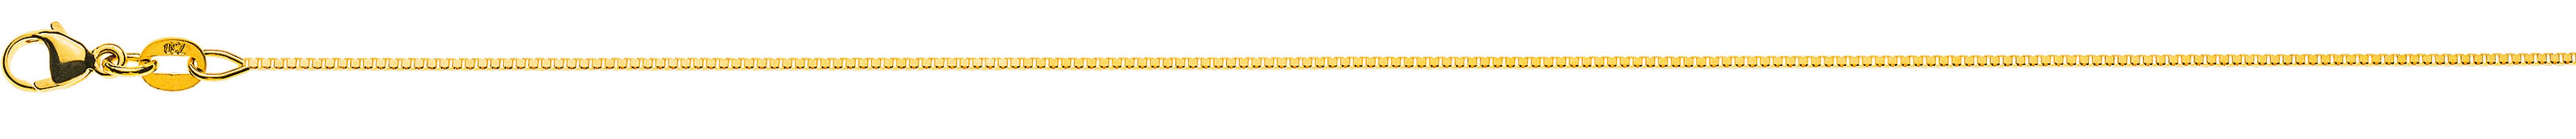 AURONOS Prestige Necklace yellow gold 18K Venetian chain diamond 40cm 0.8mm